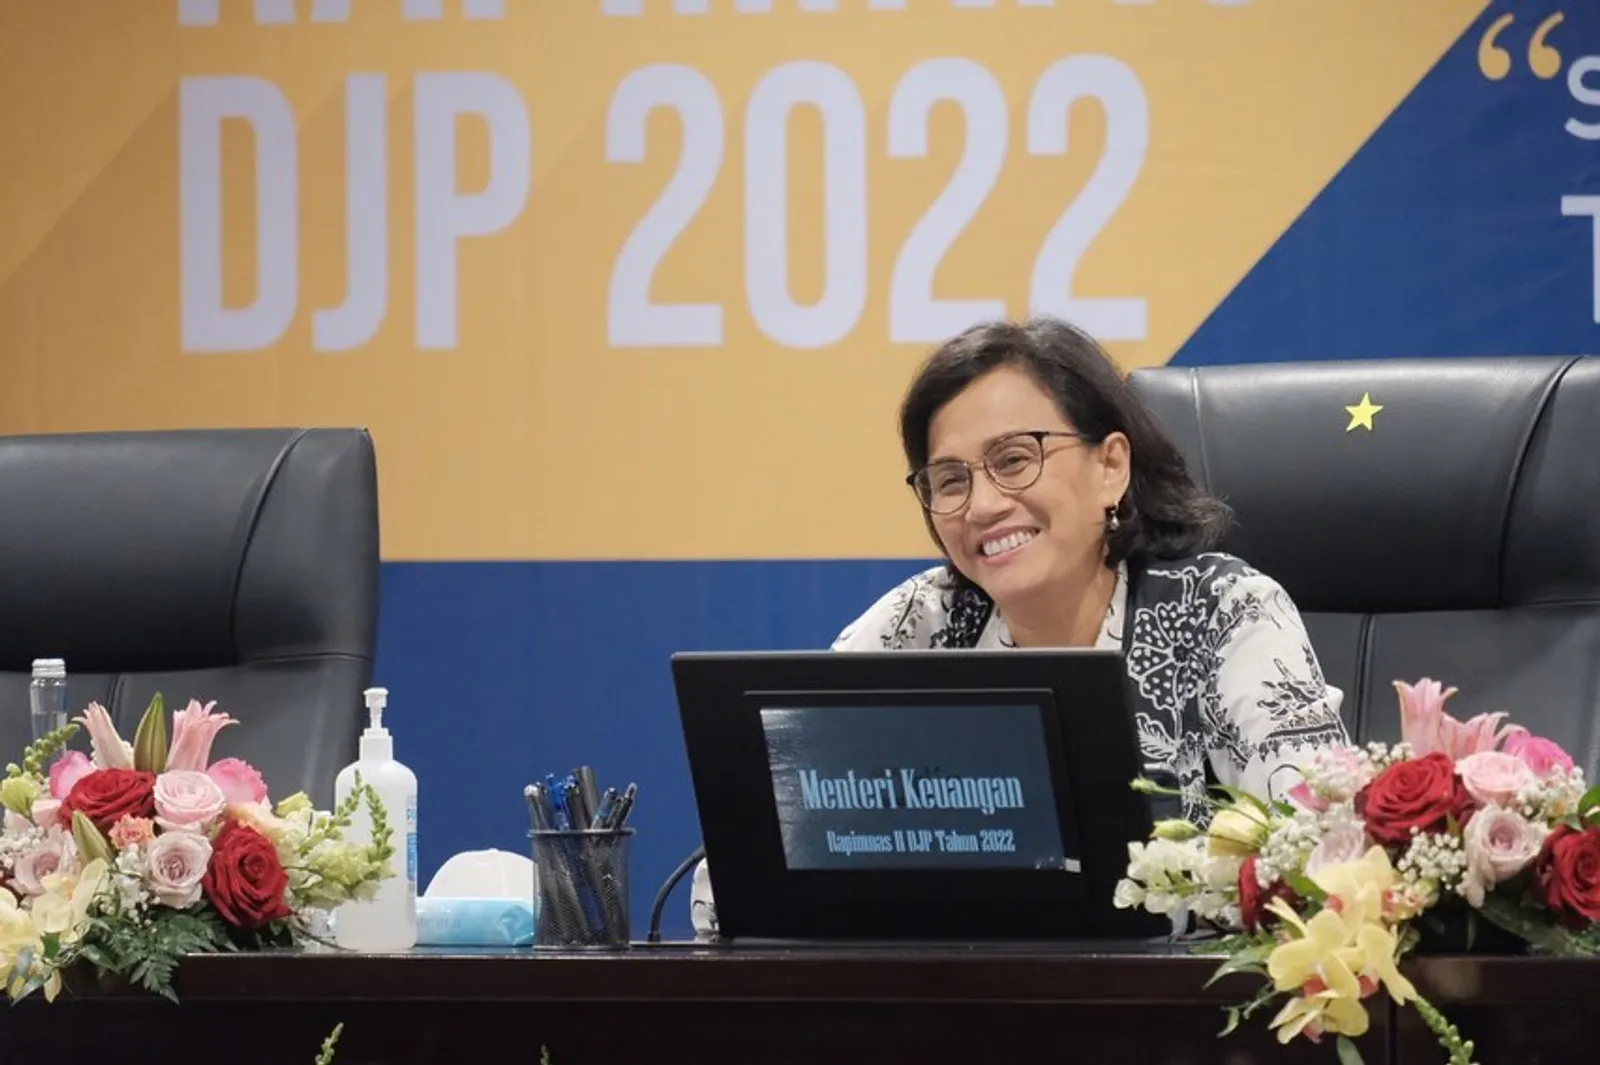 Daftar 20 Most Powerful Women 2022 Versi Fortune Indonesia